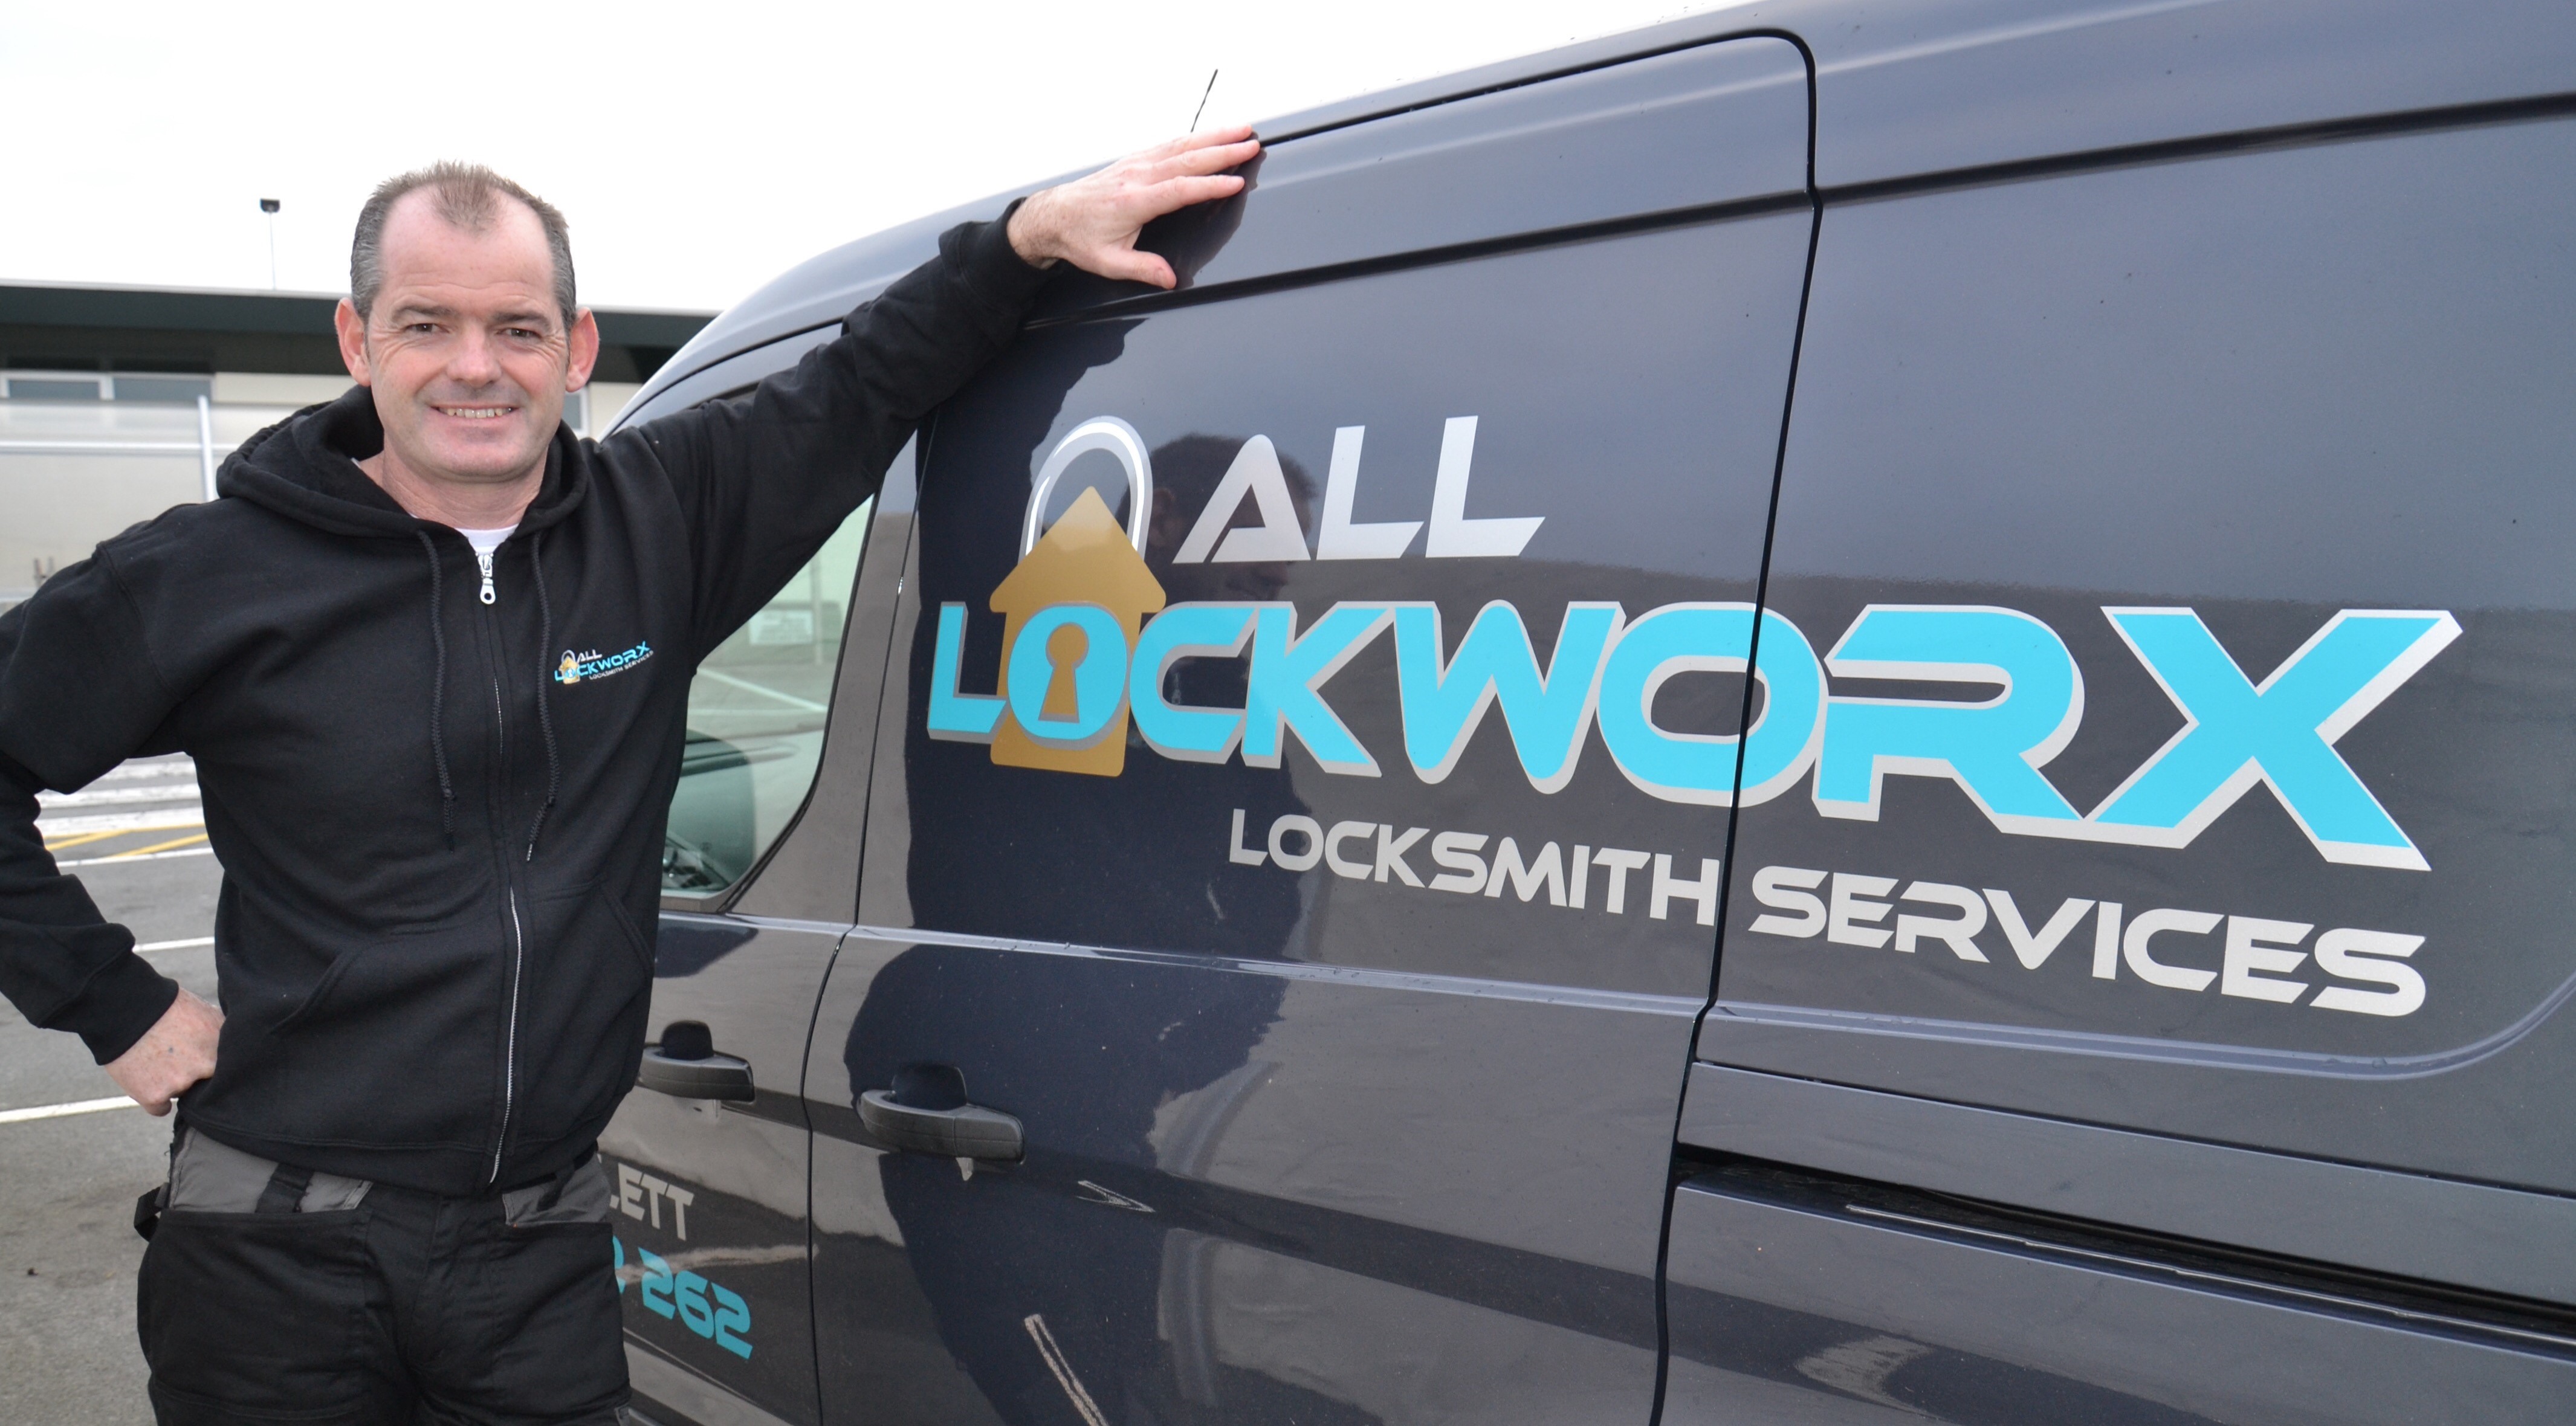 ALL LOCKWORX, UPVC LOCK REPAIRS/REPLACEMENTS - Locksmiths